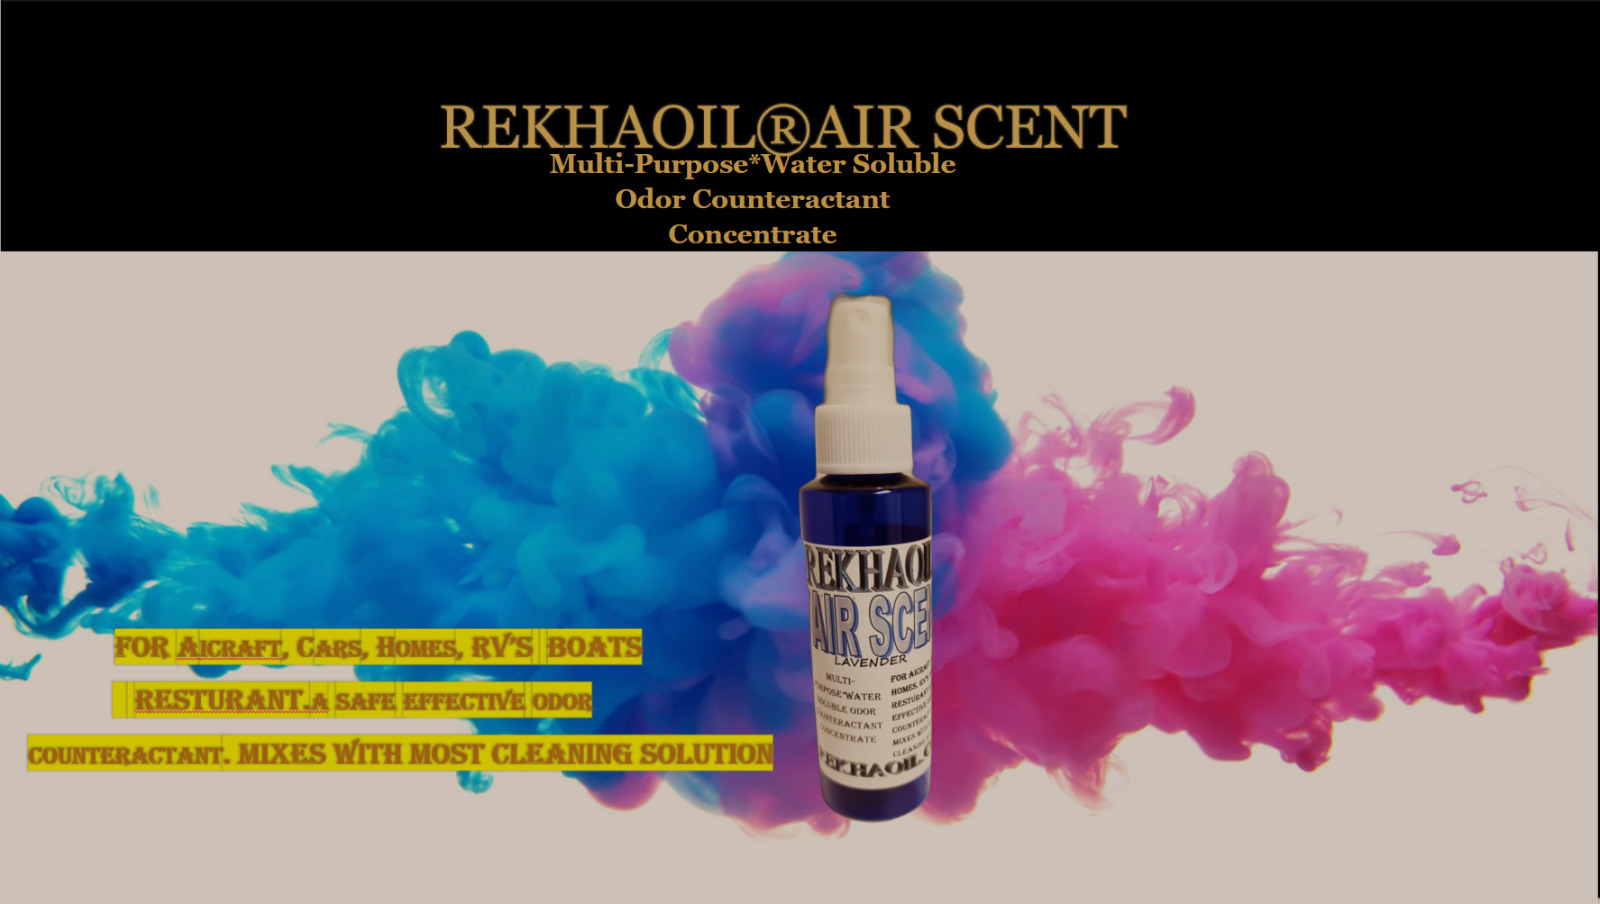 REKHAOIL®AIR SCENT CASE OF 16 BOTTLES Odor Counteractant